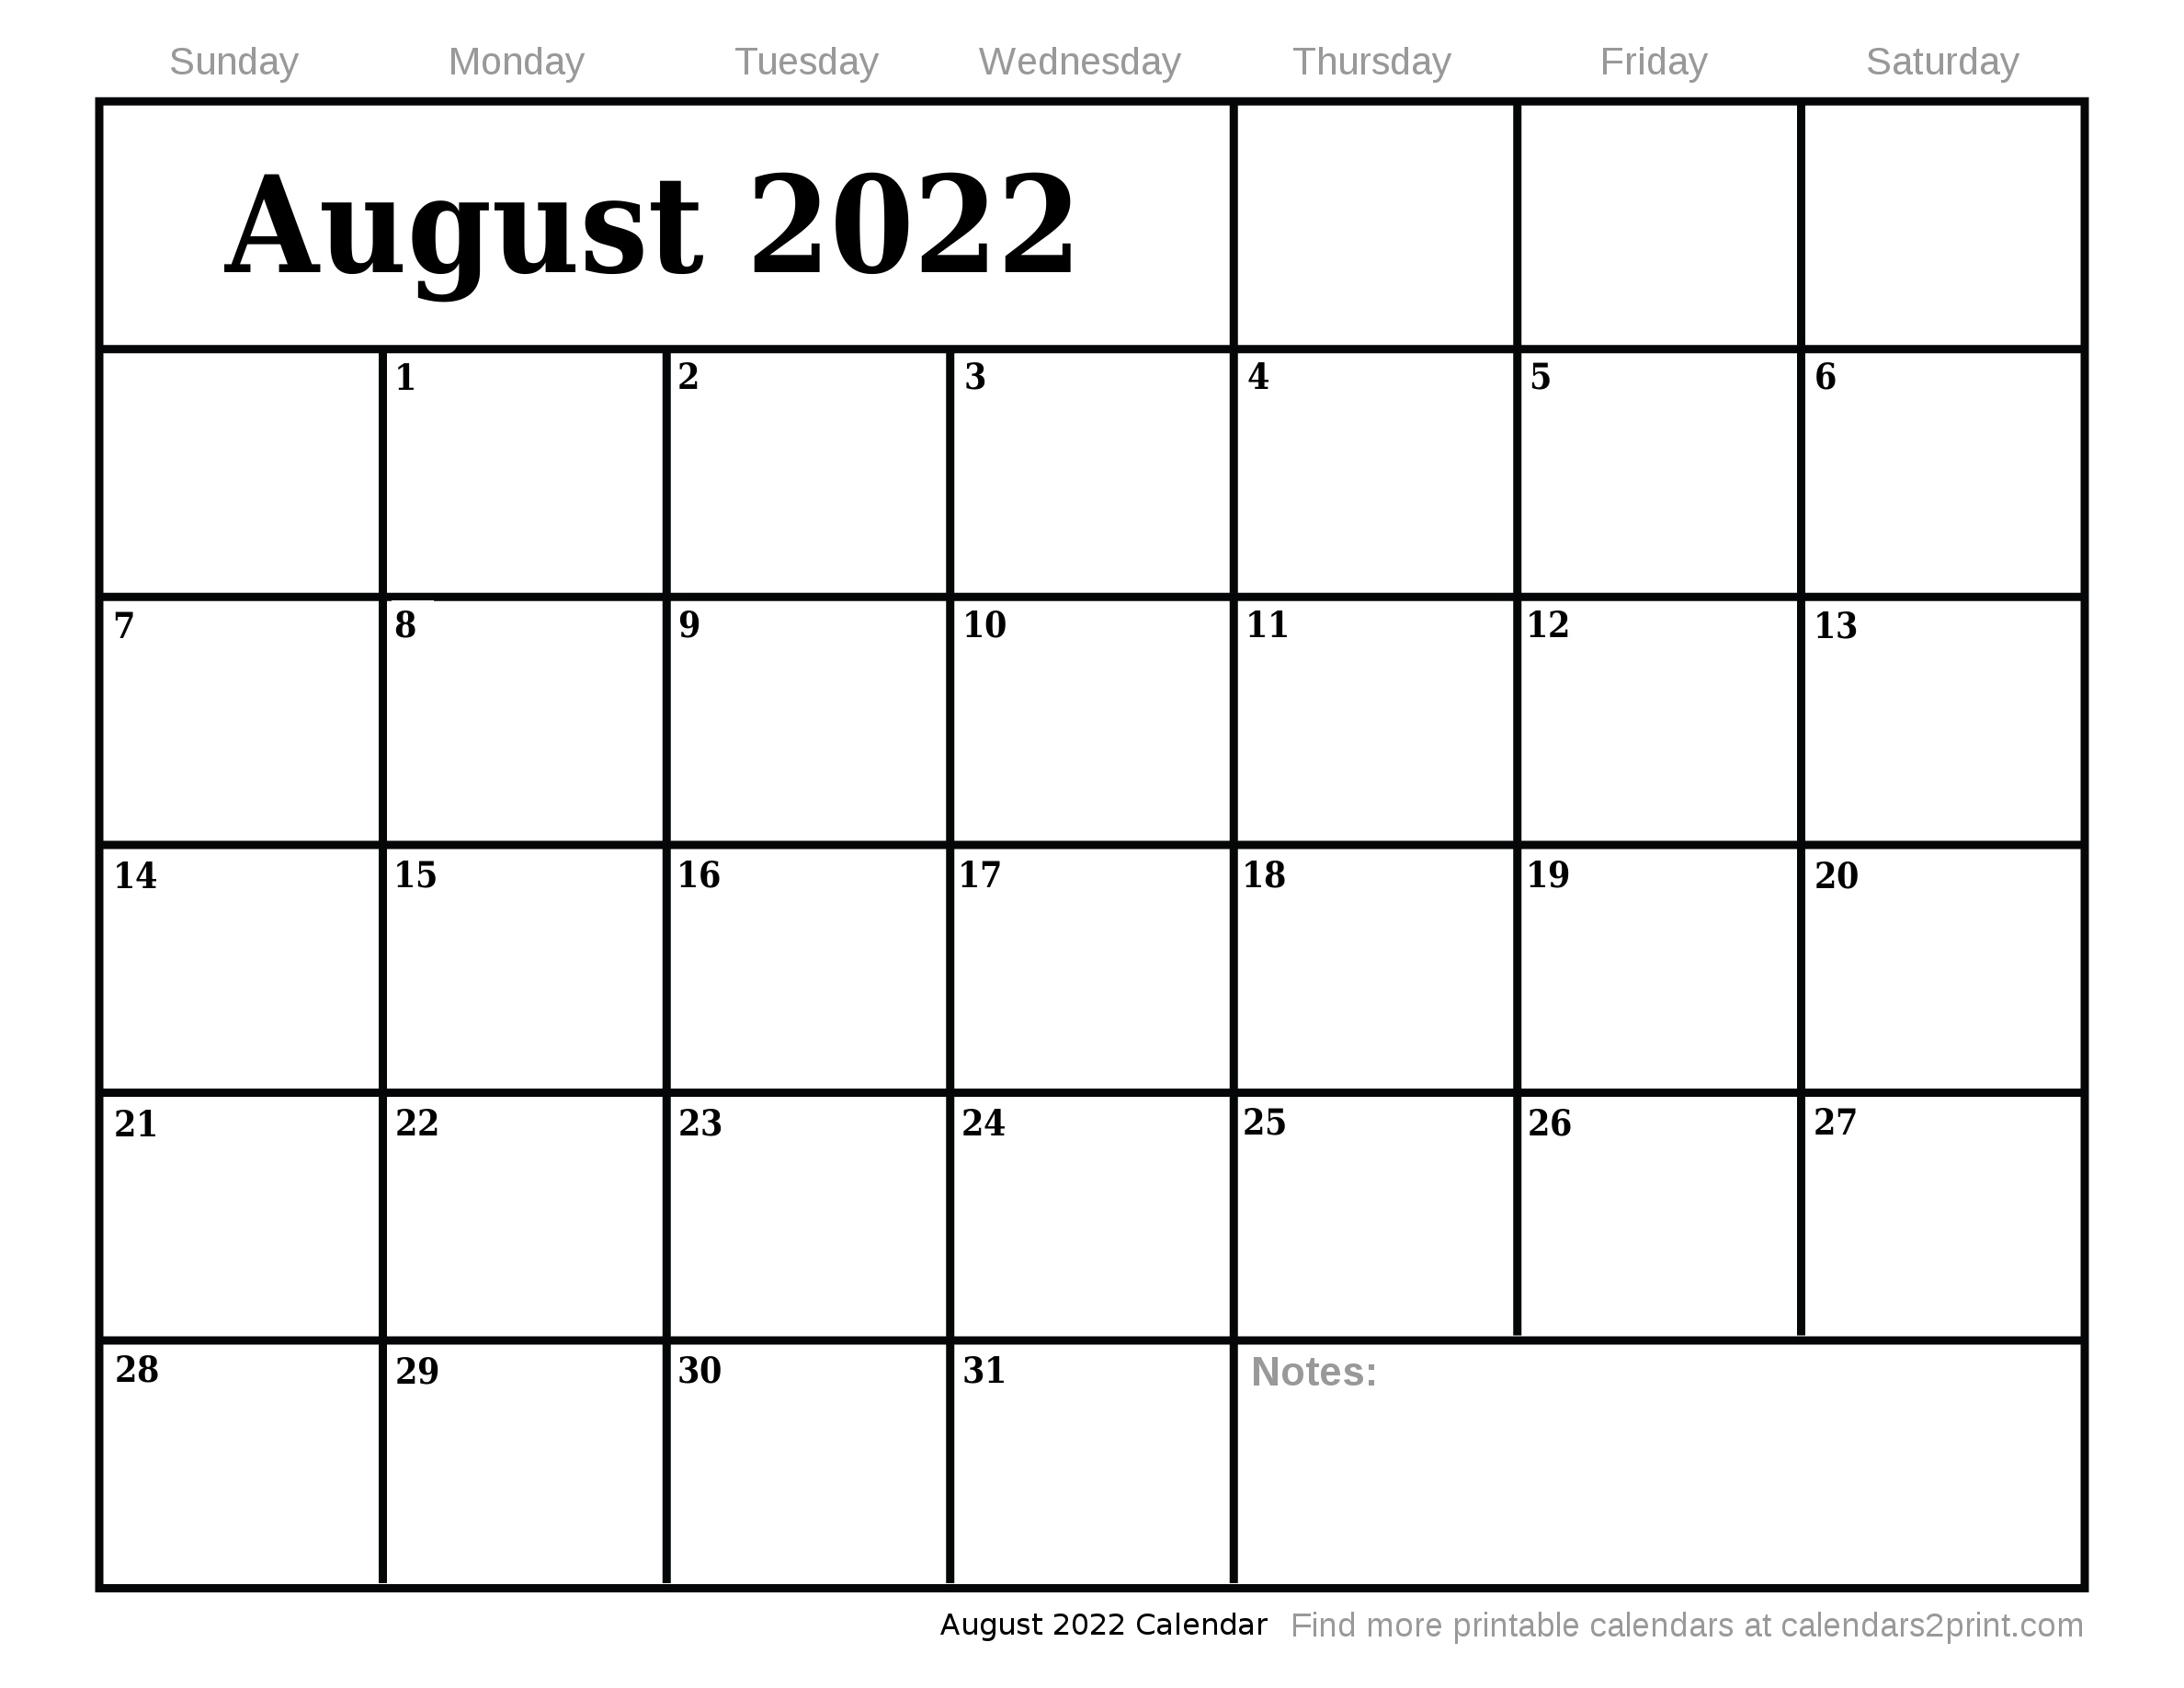 Aug 2022 Printable Calendar